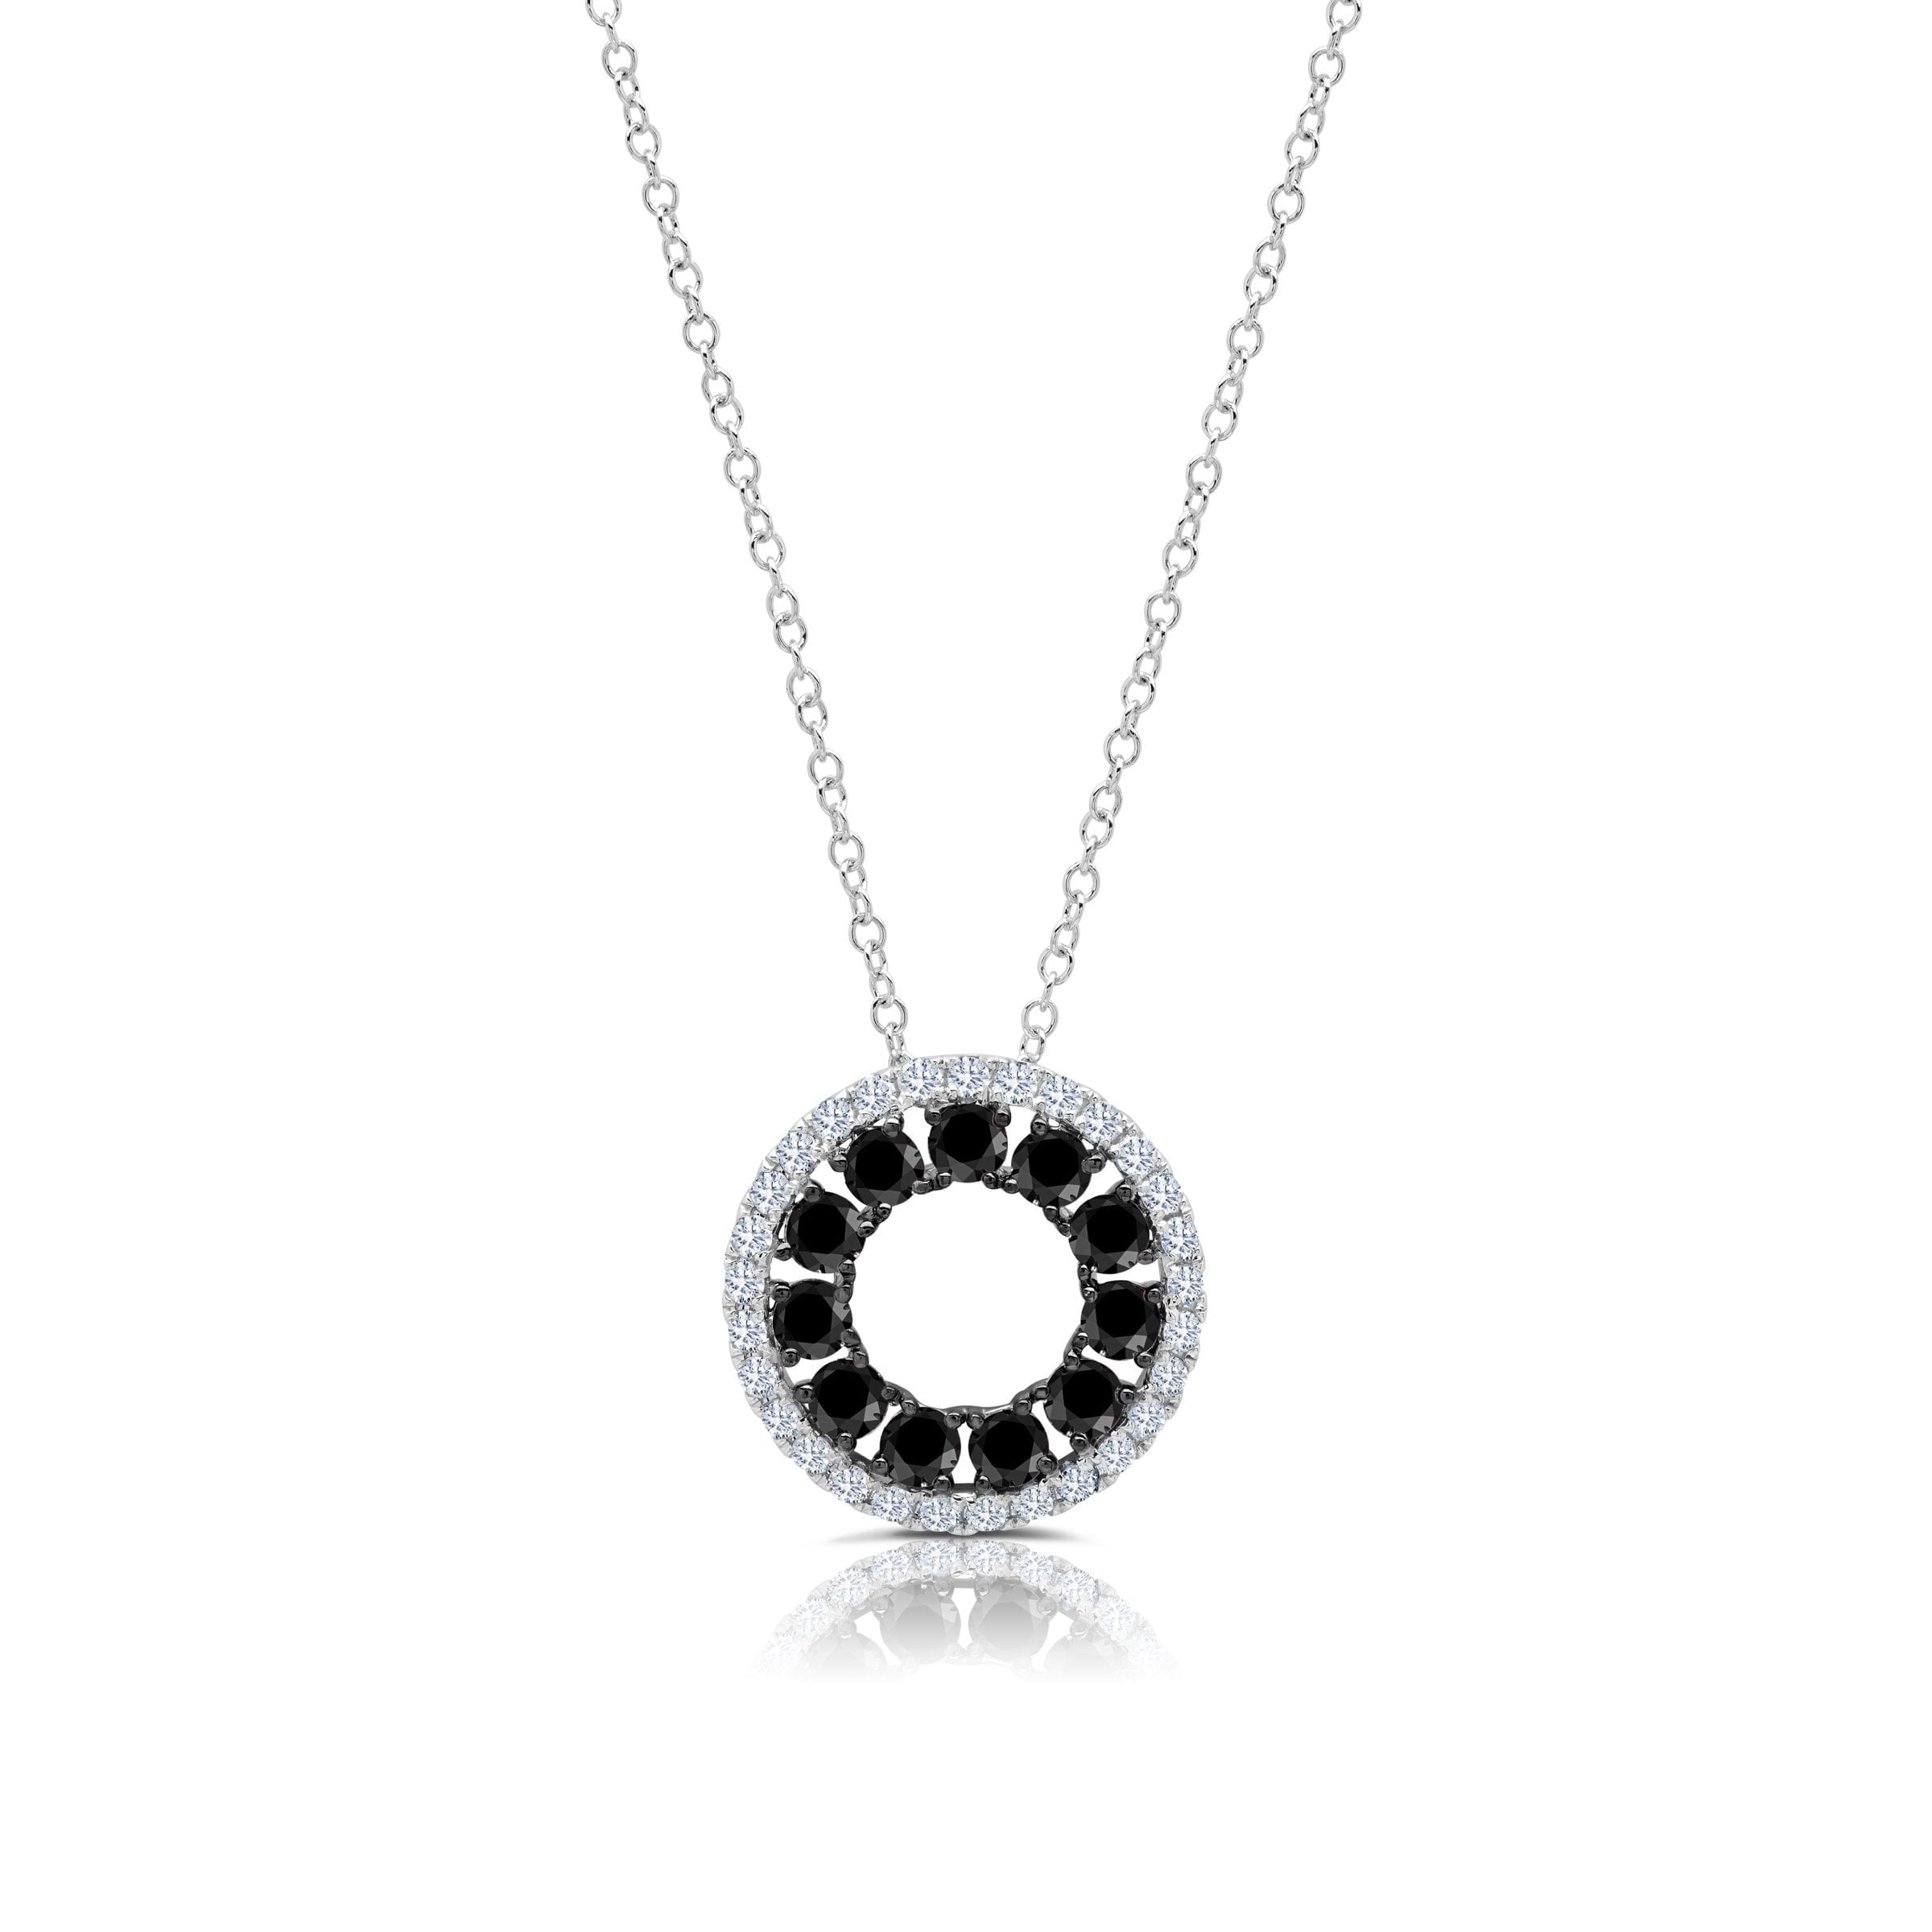 Graziela Gems - Necklace - Black & White Diamonds 3 Sided Circle Necklace - 